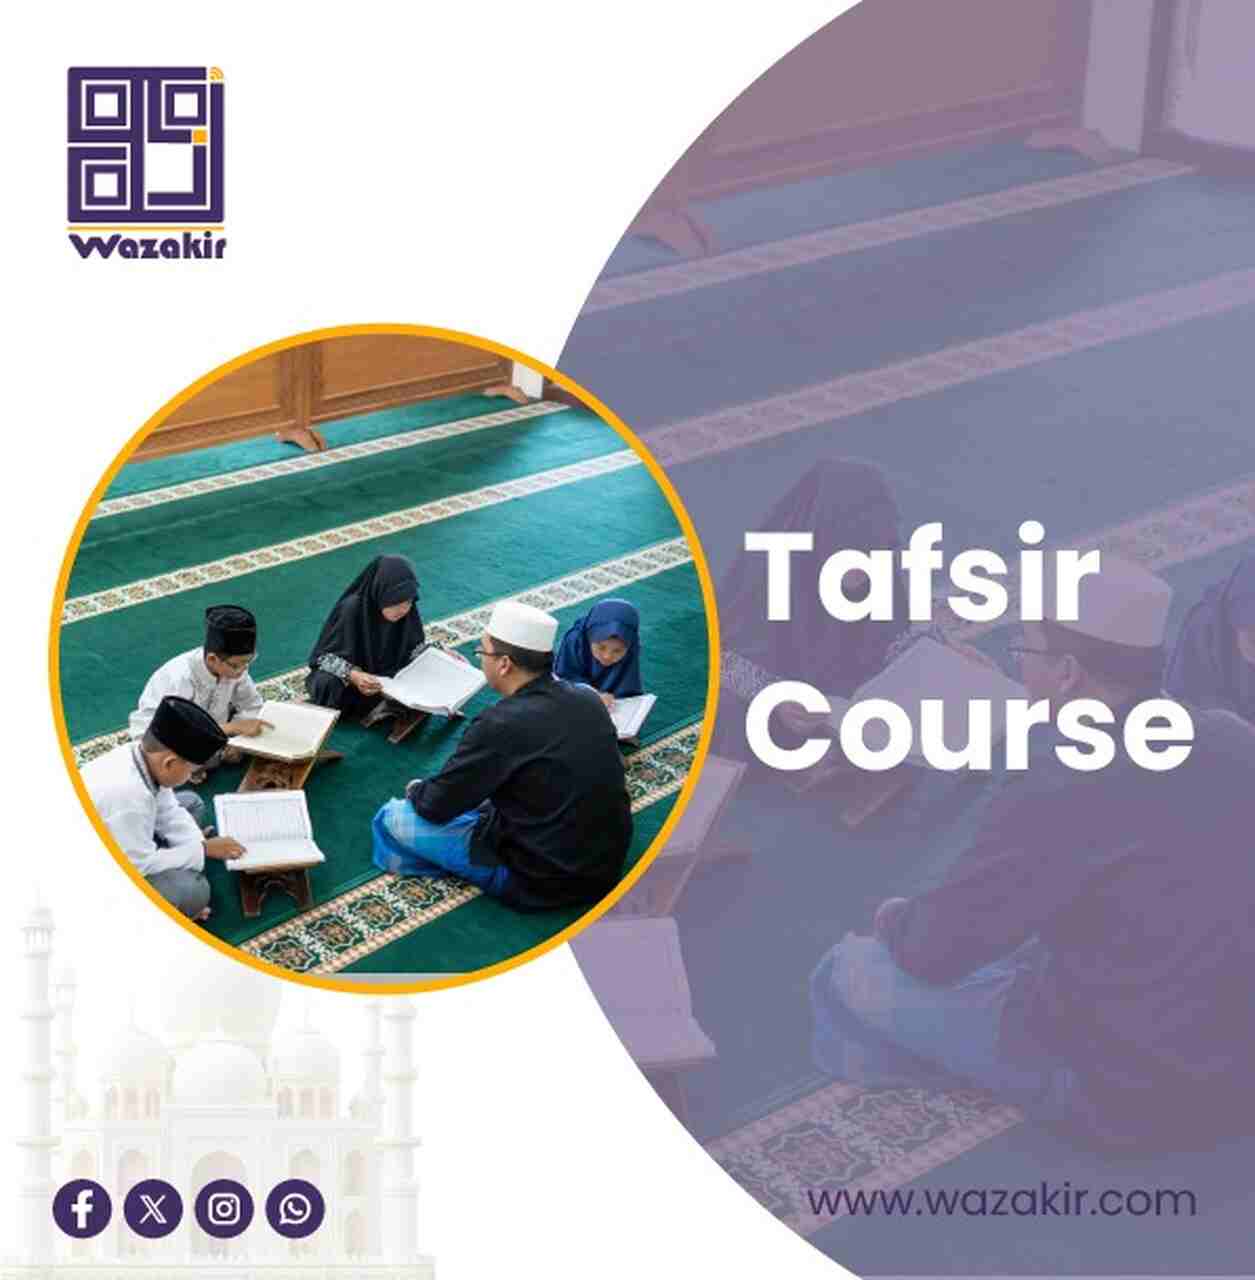 Tafsir Course